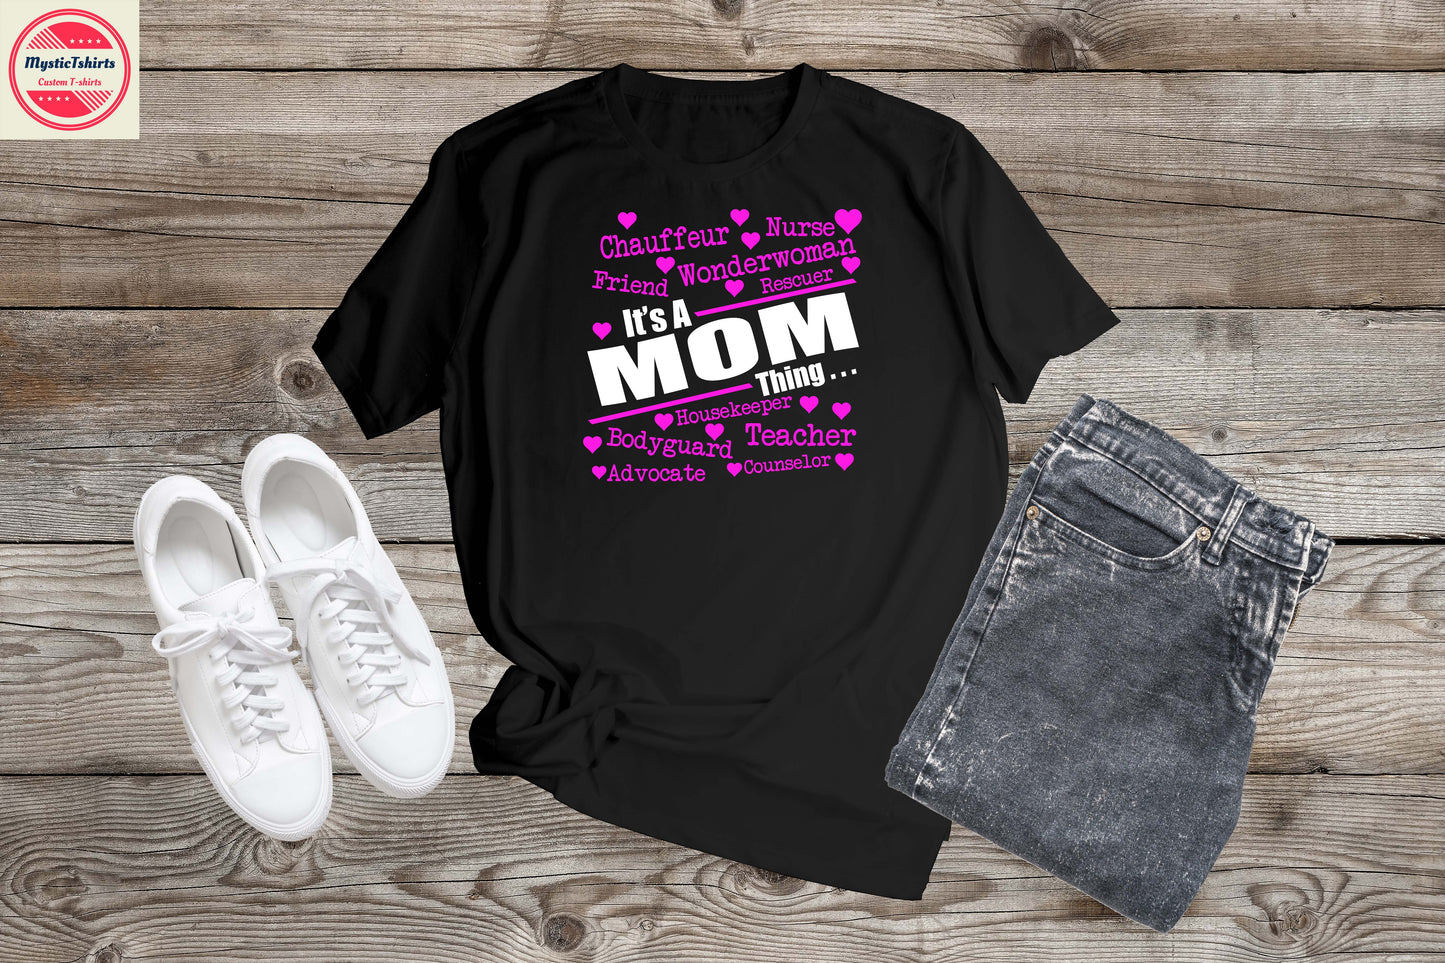 255. IT'S A MOM THING, Custom Made Shirt, Personalized T-Shirt, Custom Text, Make Your Own Shirt, Custom Tee